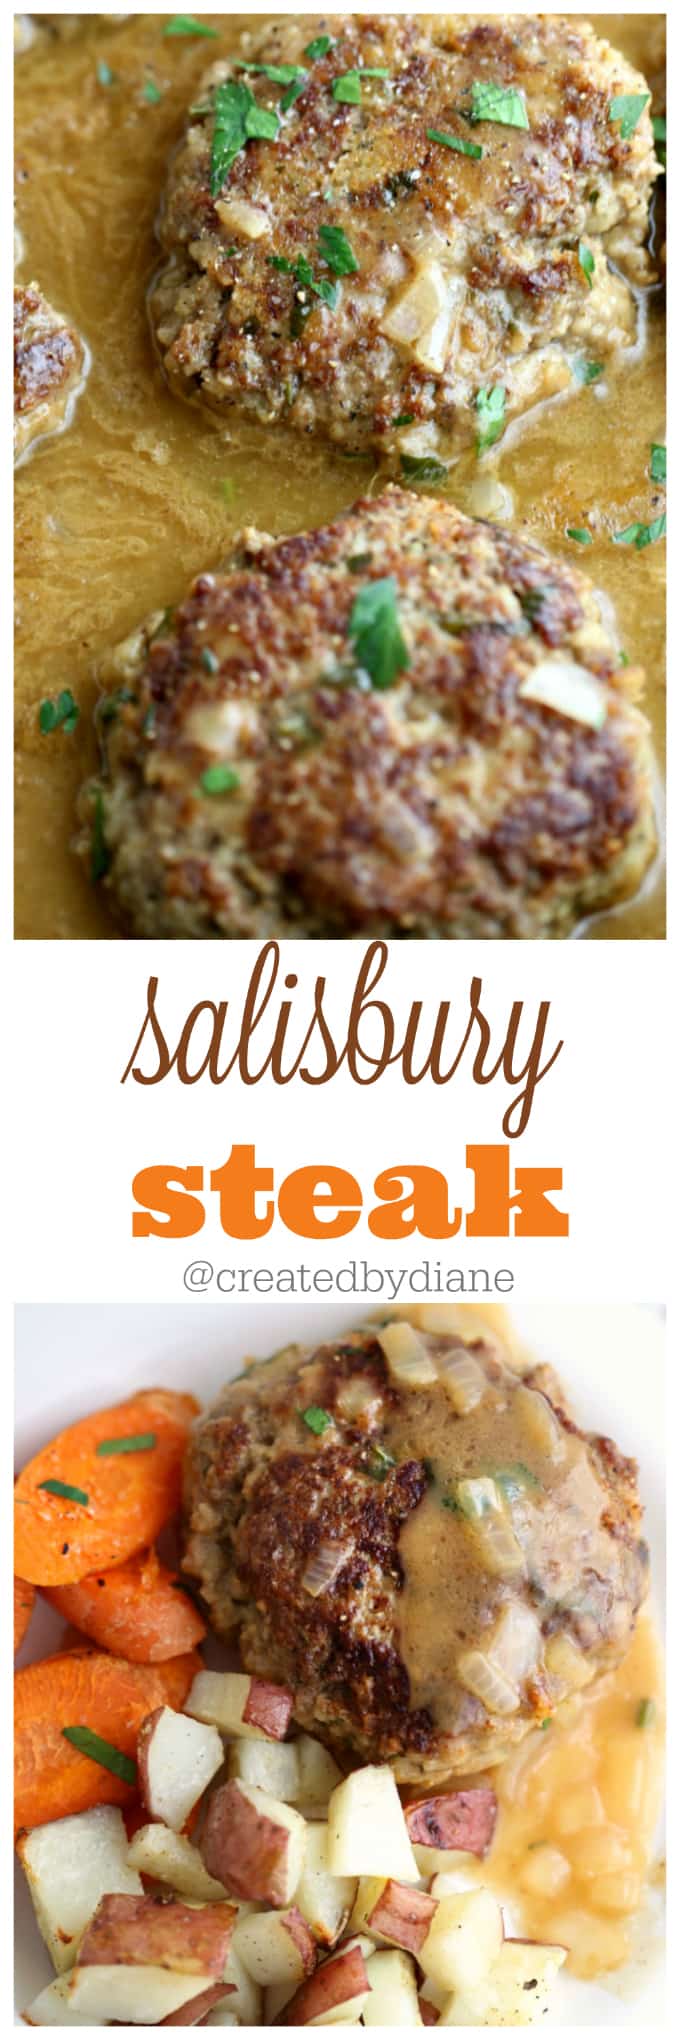 salisbury steak recipe from @createdbydiane